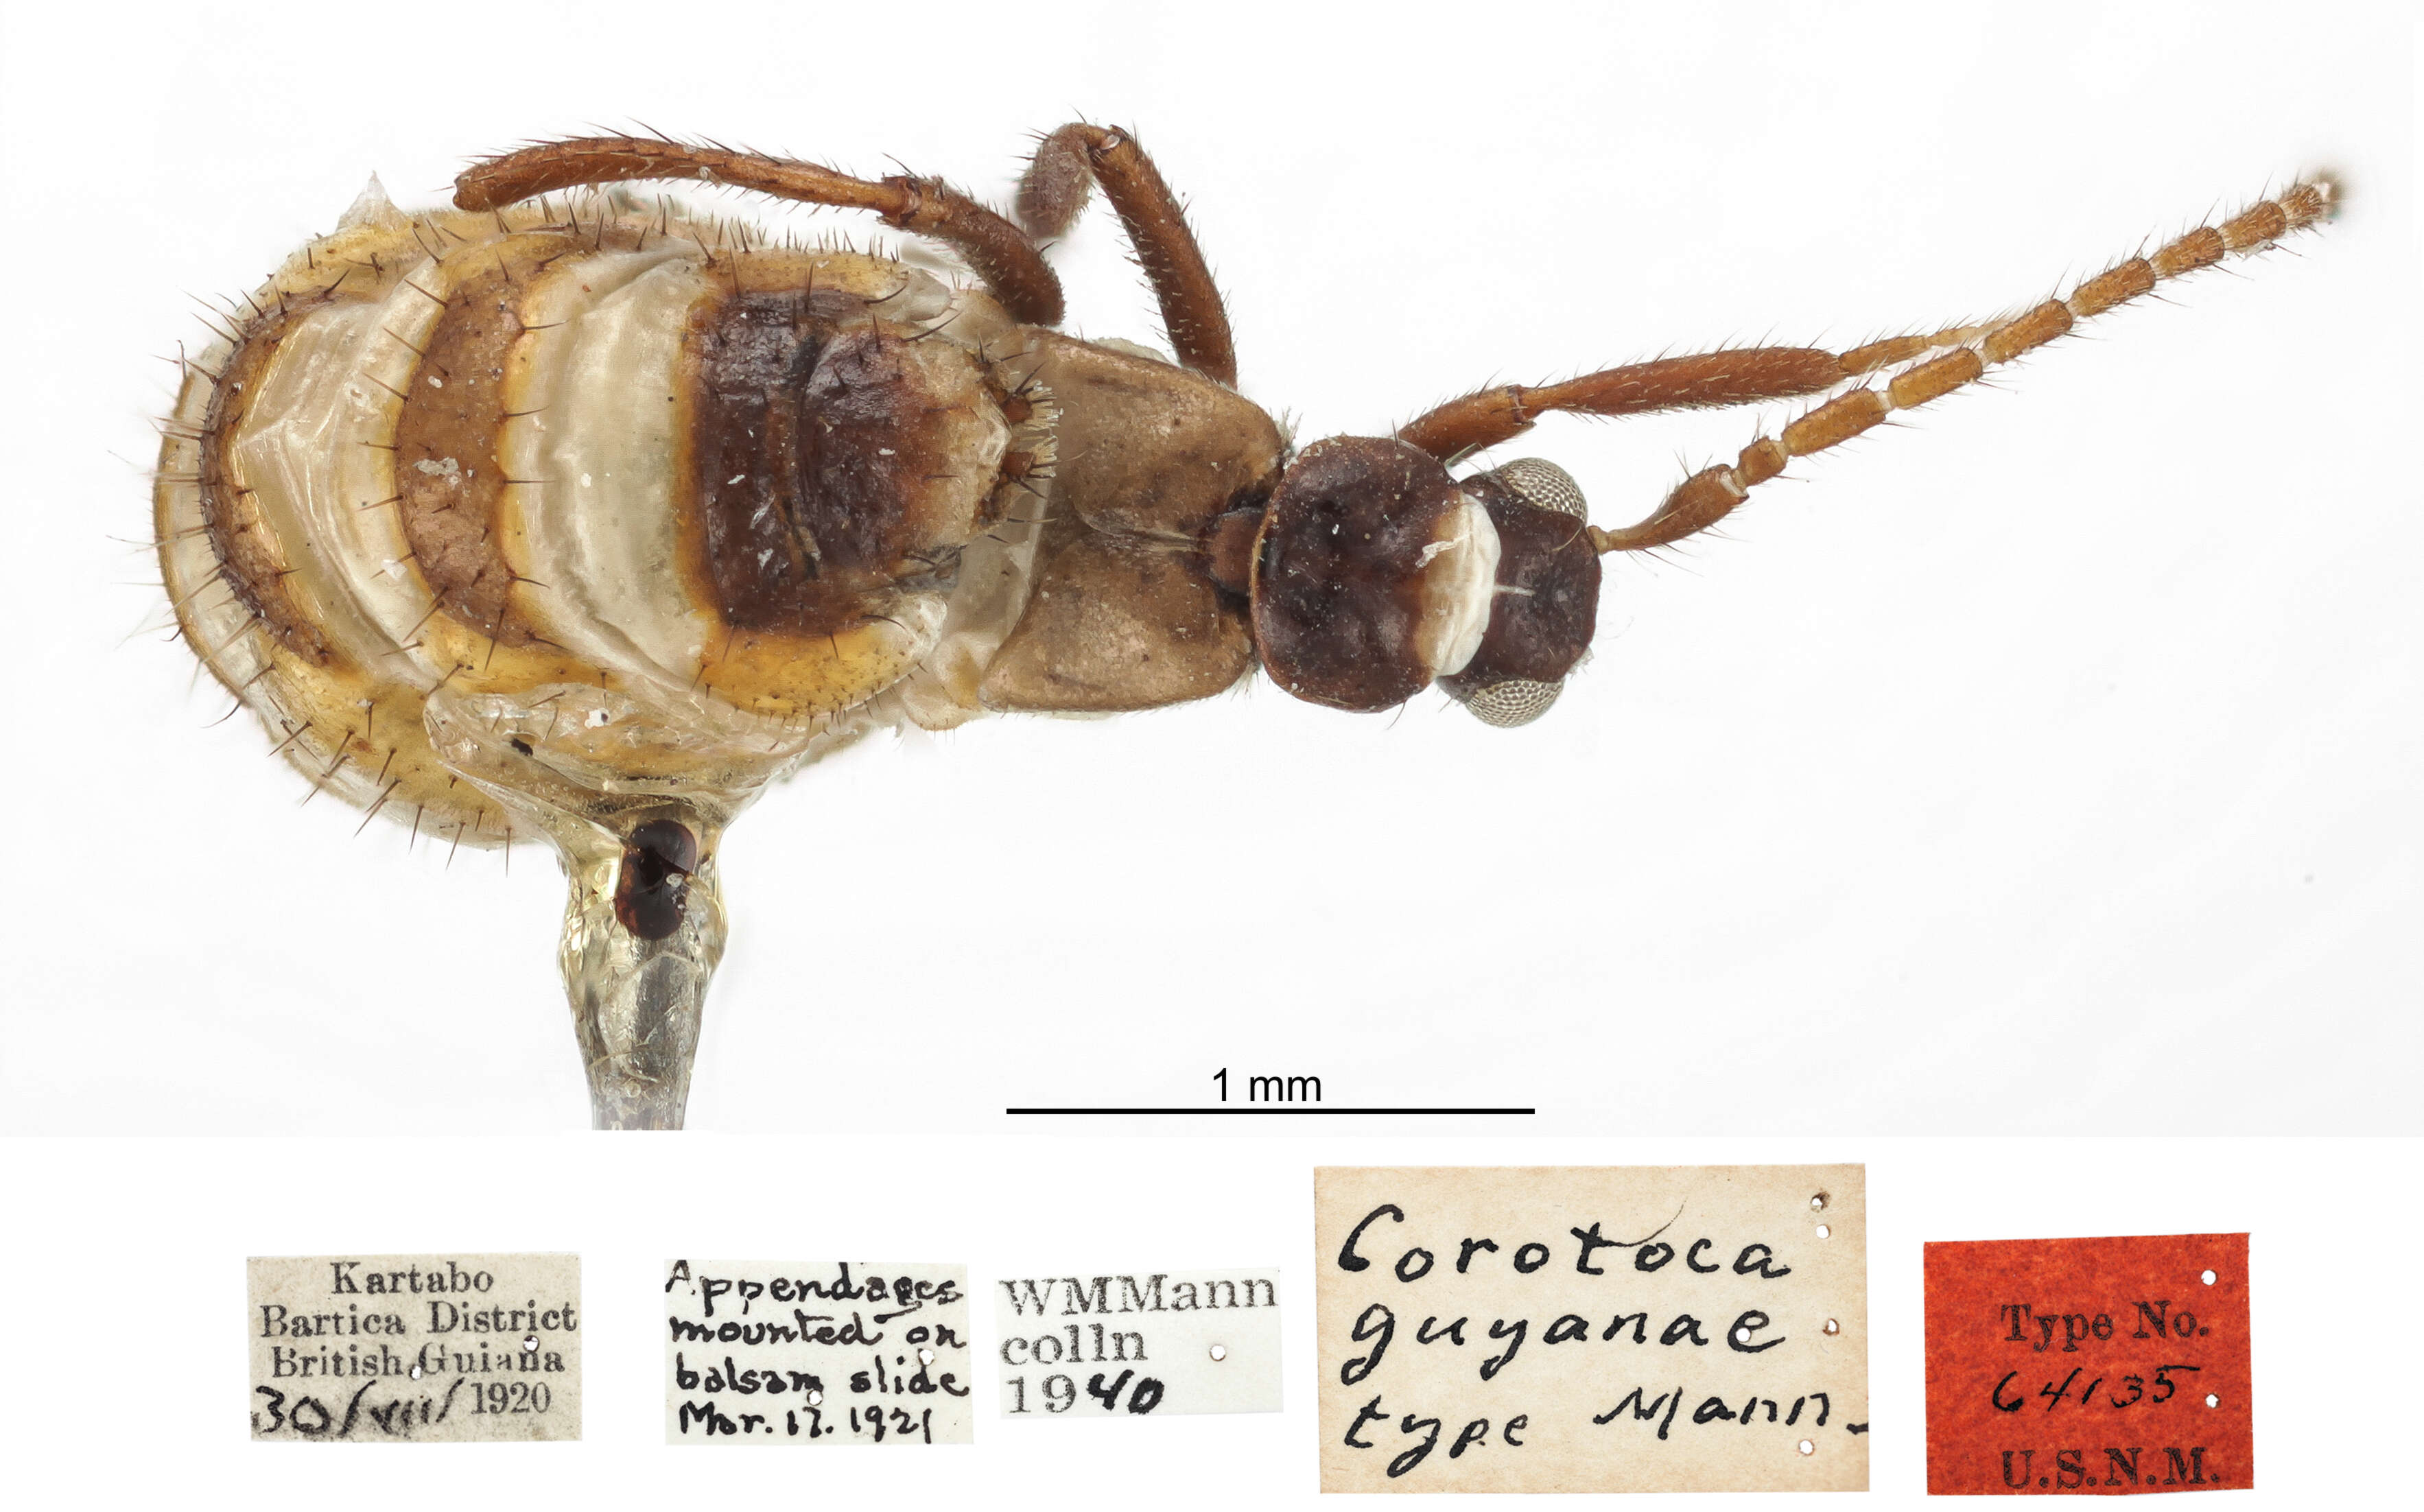 Cavifronexus guyanae (Mann 1923) resmi